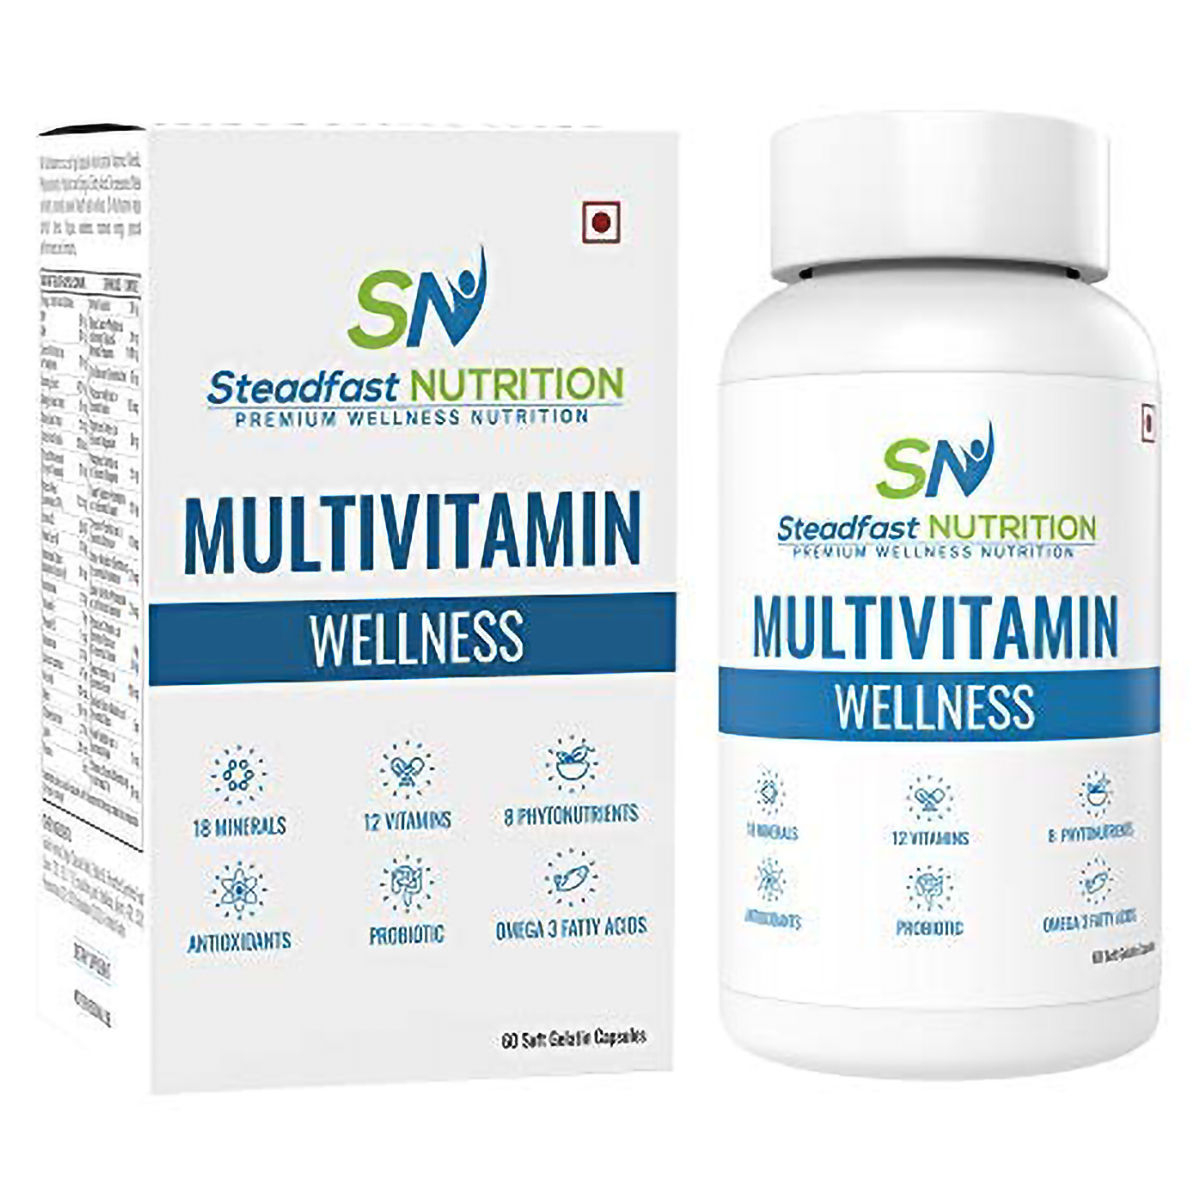 Buy Steadfast Nutrition Multivitamin Wellness, 60 Soft Gelatin Capsules Online